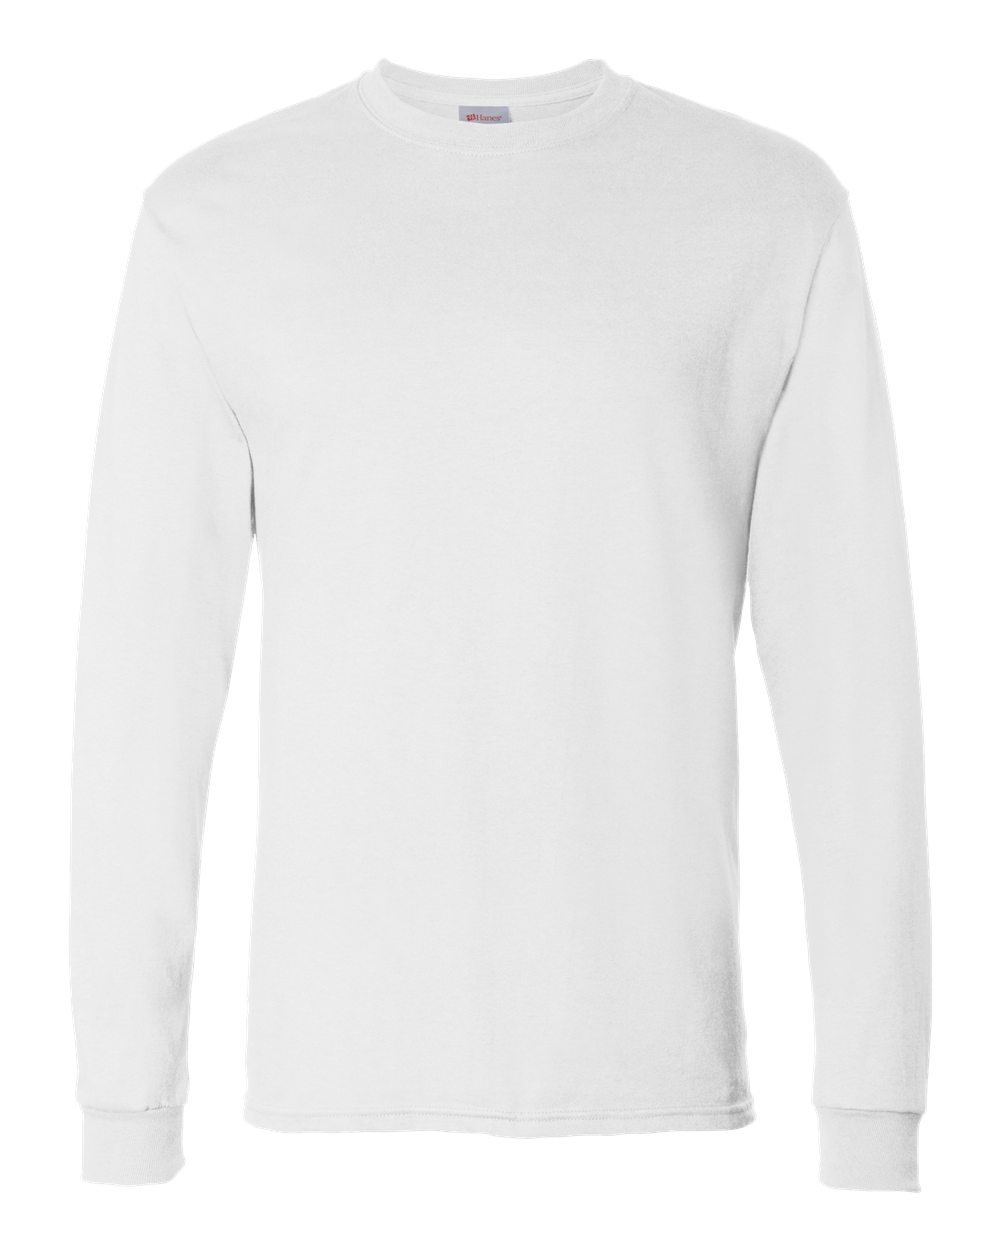 Hanes Men's Essentials Long Sleeve T-Shirt Pack, Crewneck Cotton Tees, 4-Pack